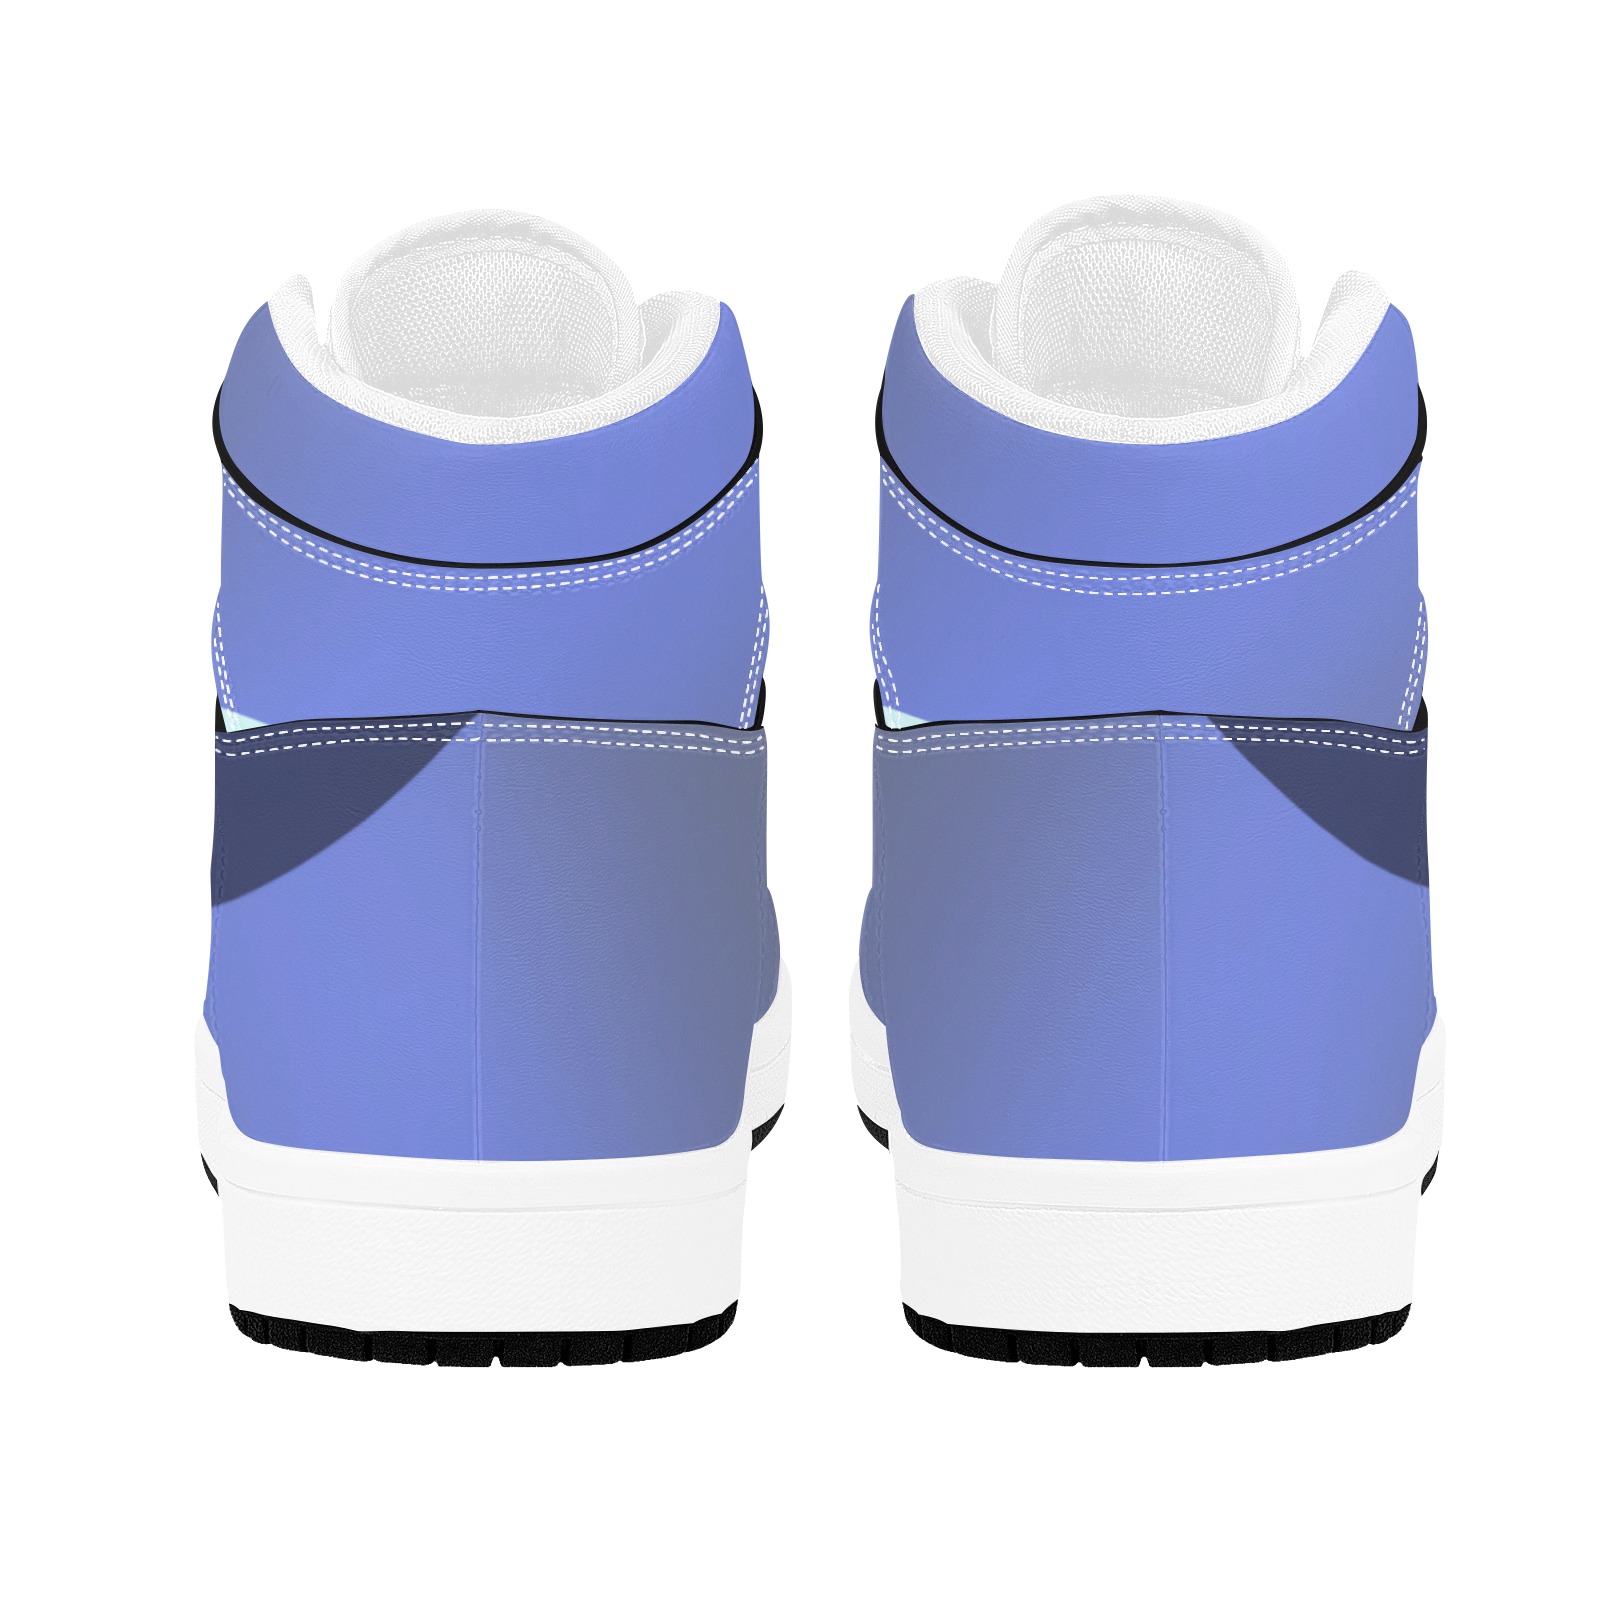 Three Tone Blue Men's High Top Sneakers (Model 20042)